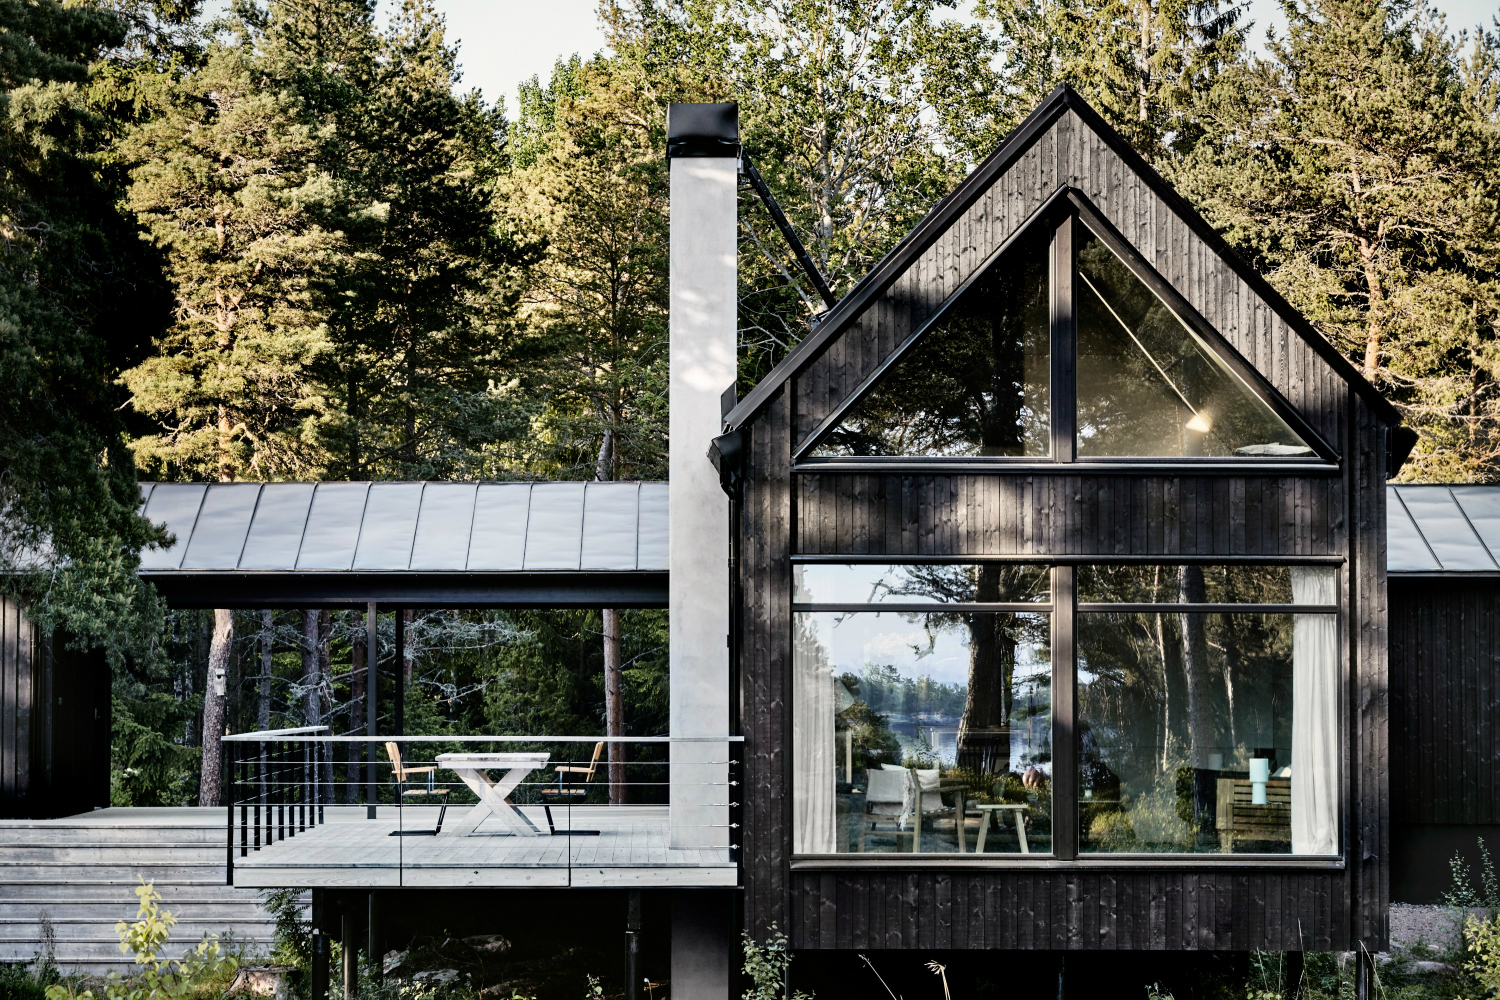 archipelago sommarhus swedish cabin kod arkitekter summerhouse 9